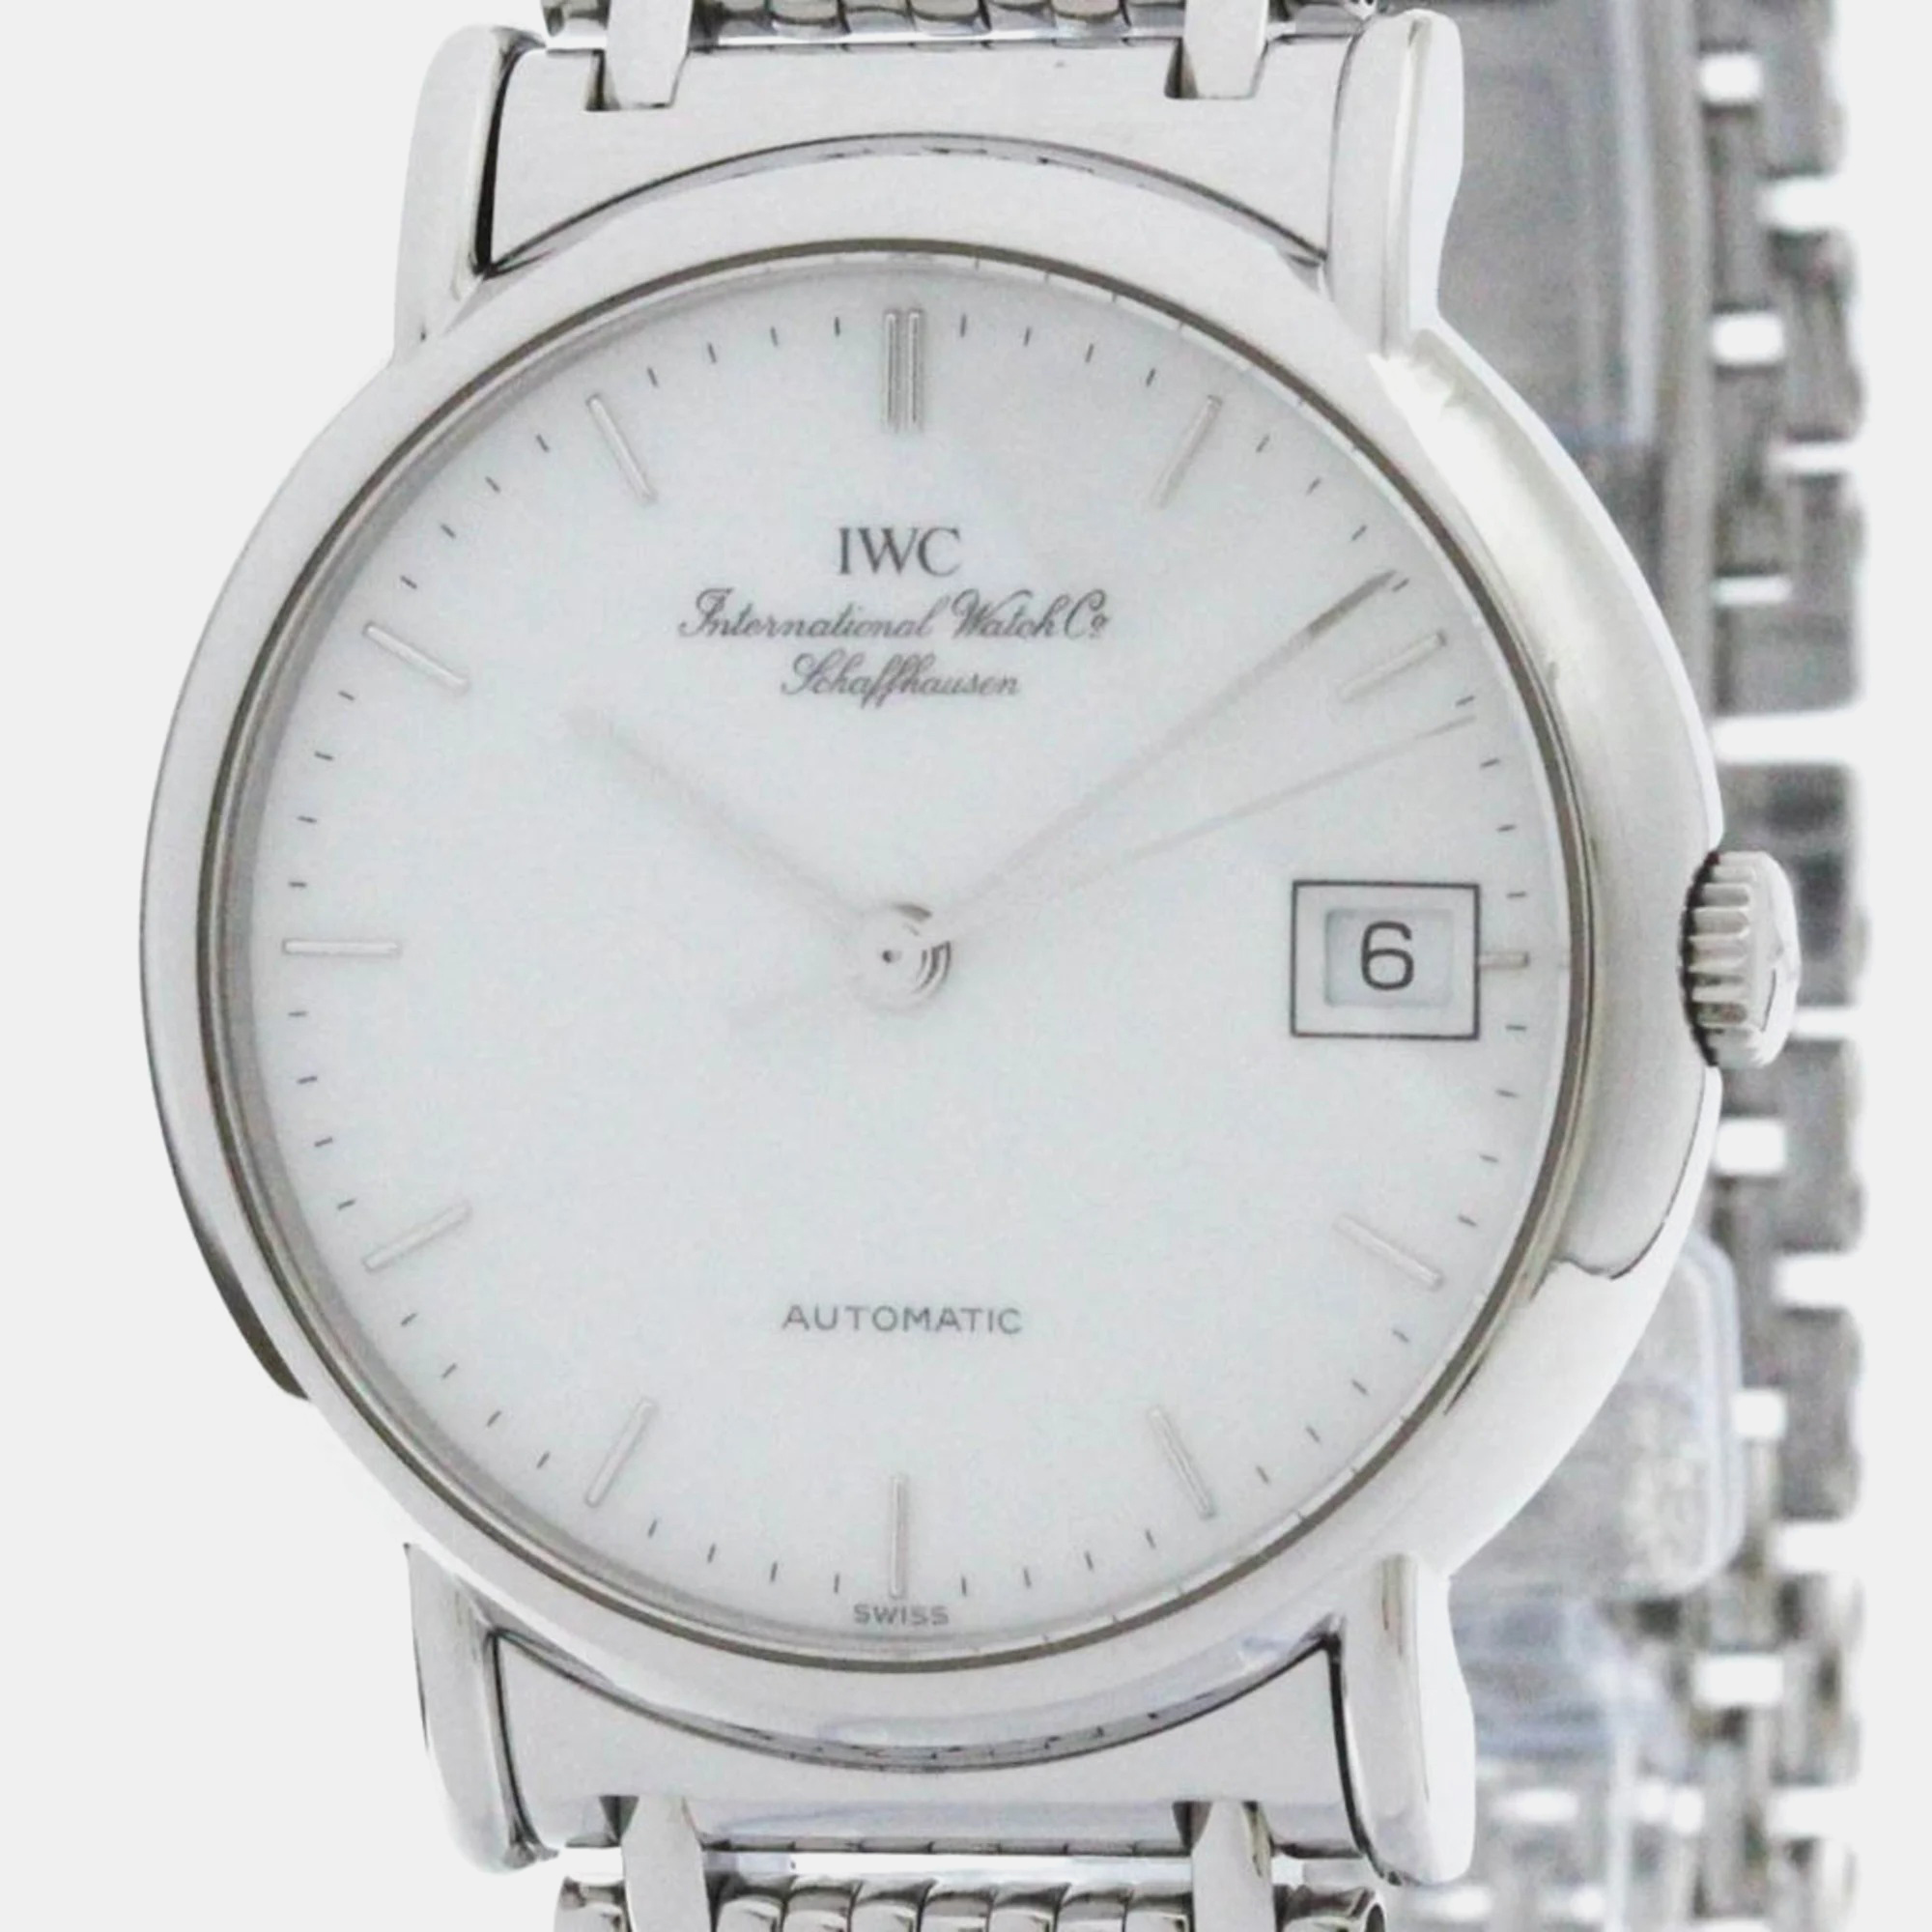 Iwc white stainless steel portofino automatic men's wristwatch 34 mm